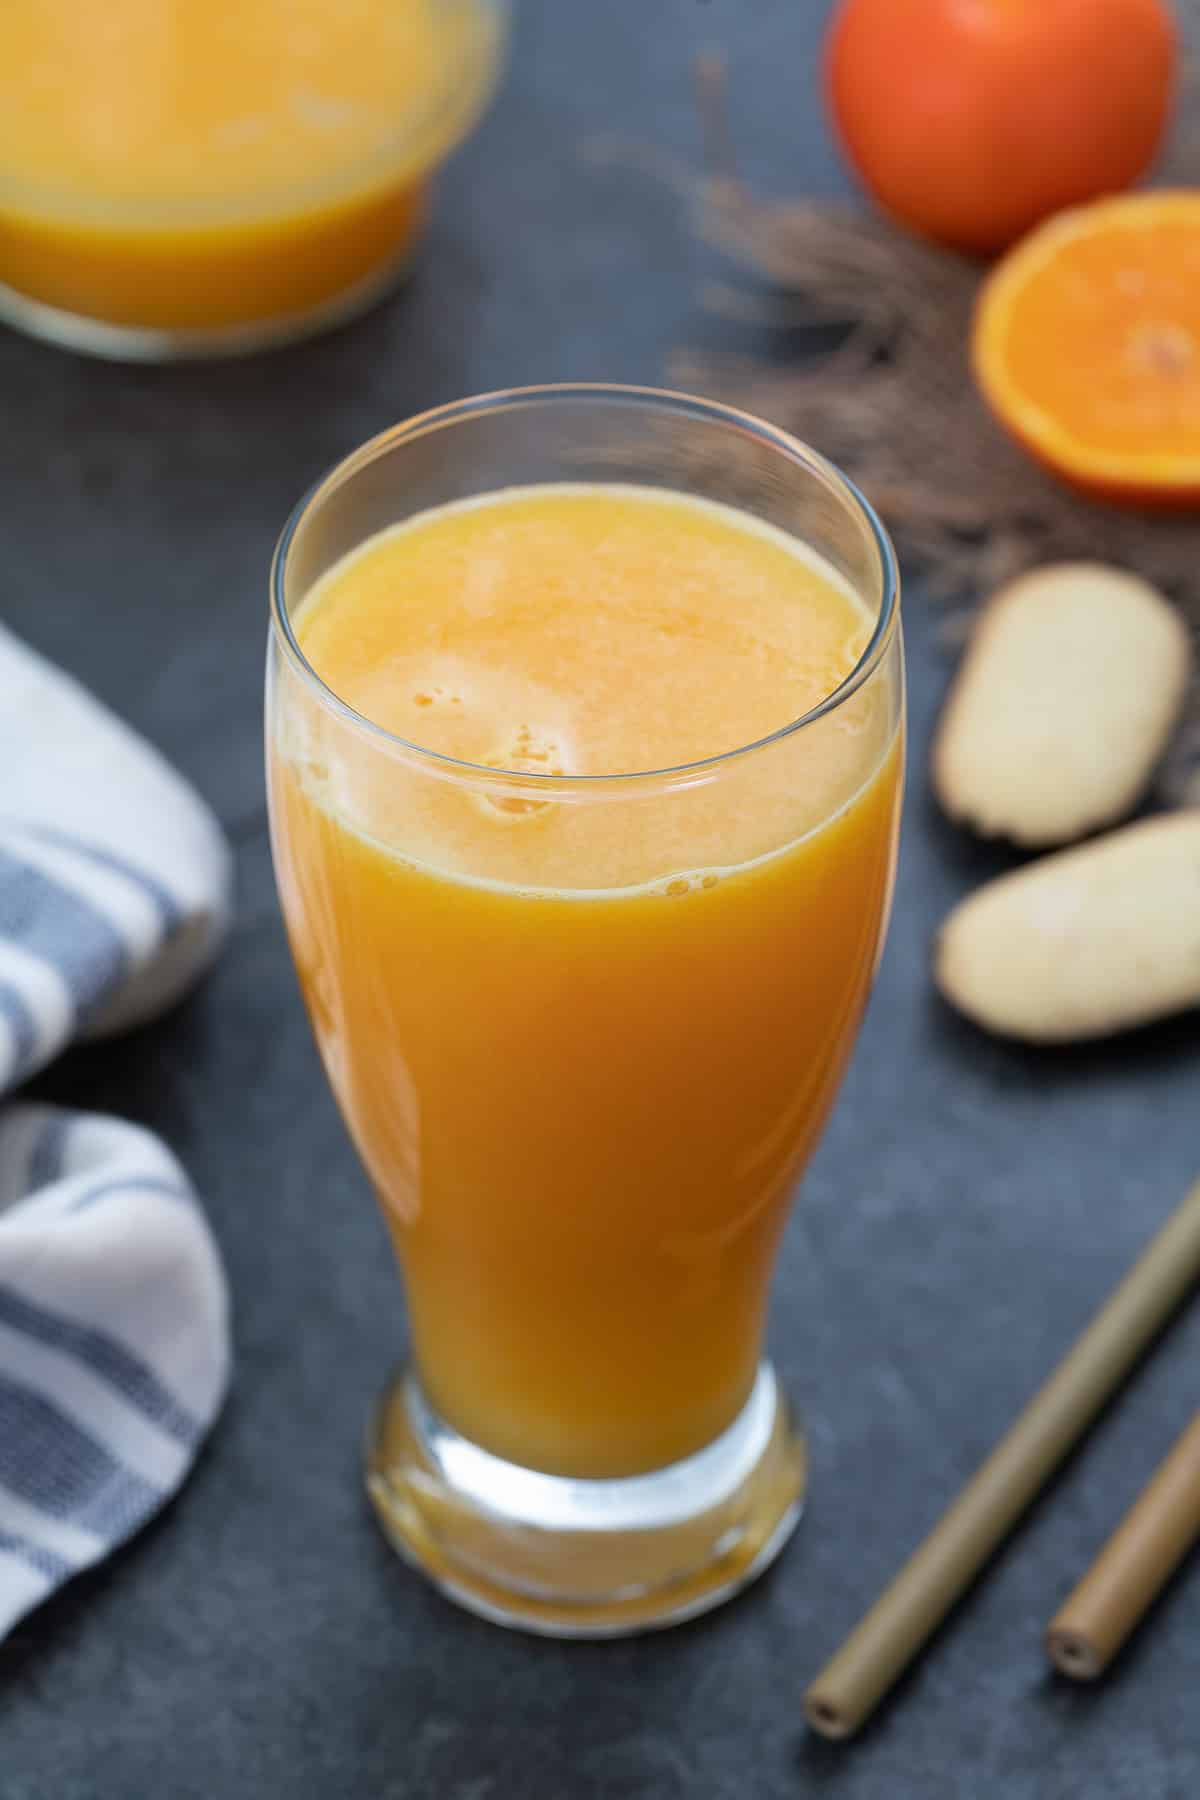 Orange juice served in a glass